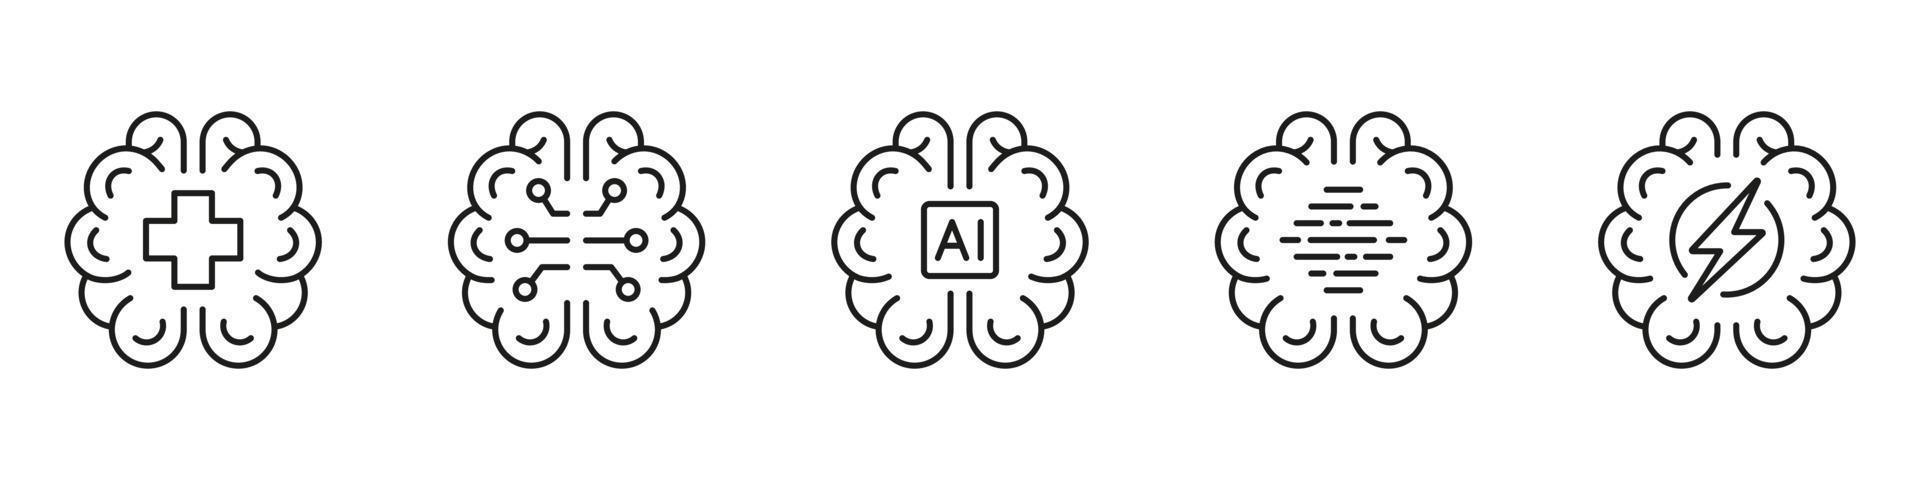 neurología ciencia, digital tecnología lineal pictograma colocar. humano cerebro ai concepto negro línea iconos artificial inteligencia símbolo en blanco antecedentes. editable ataque. aislado vector ilustración.